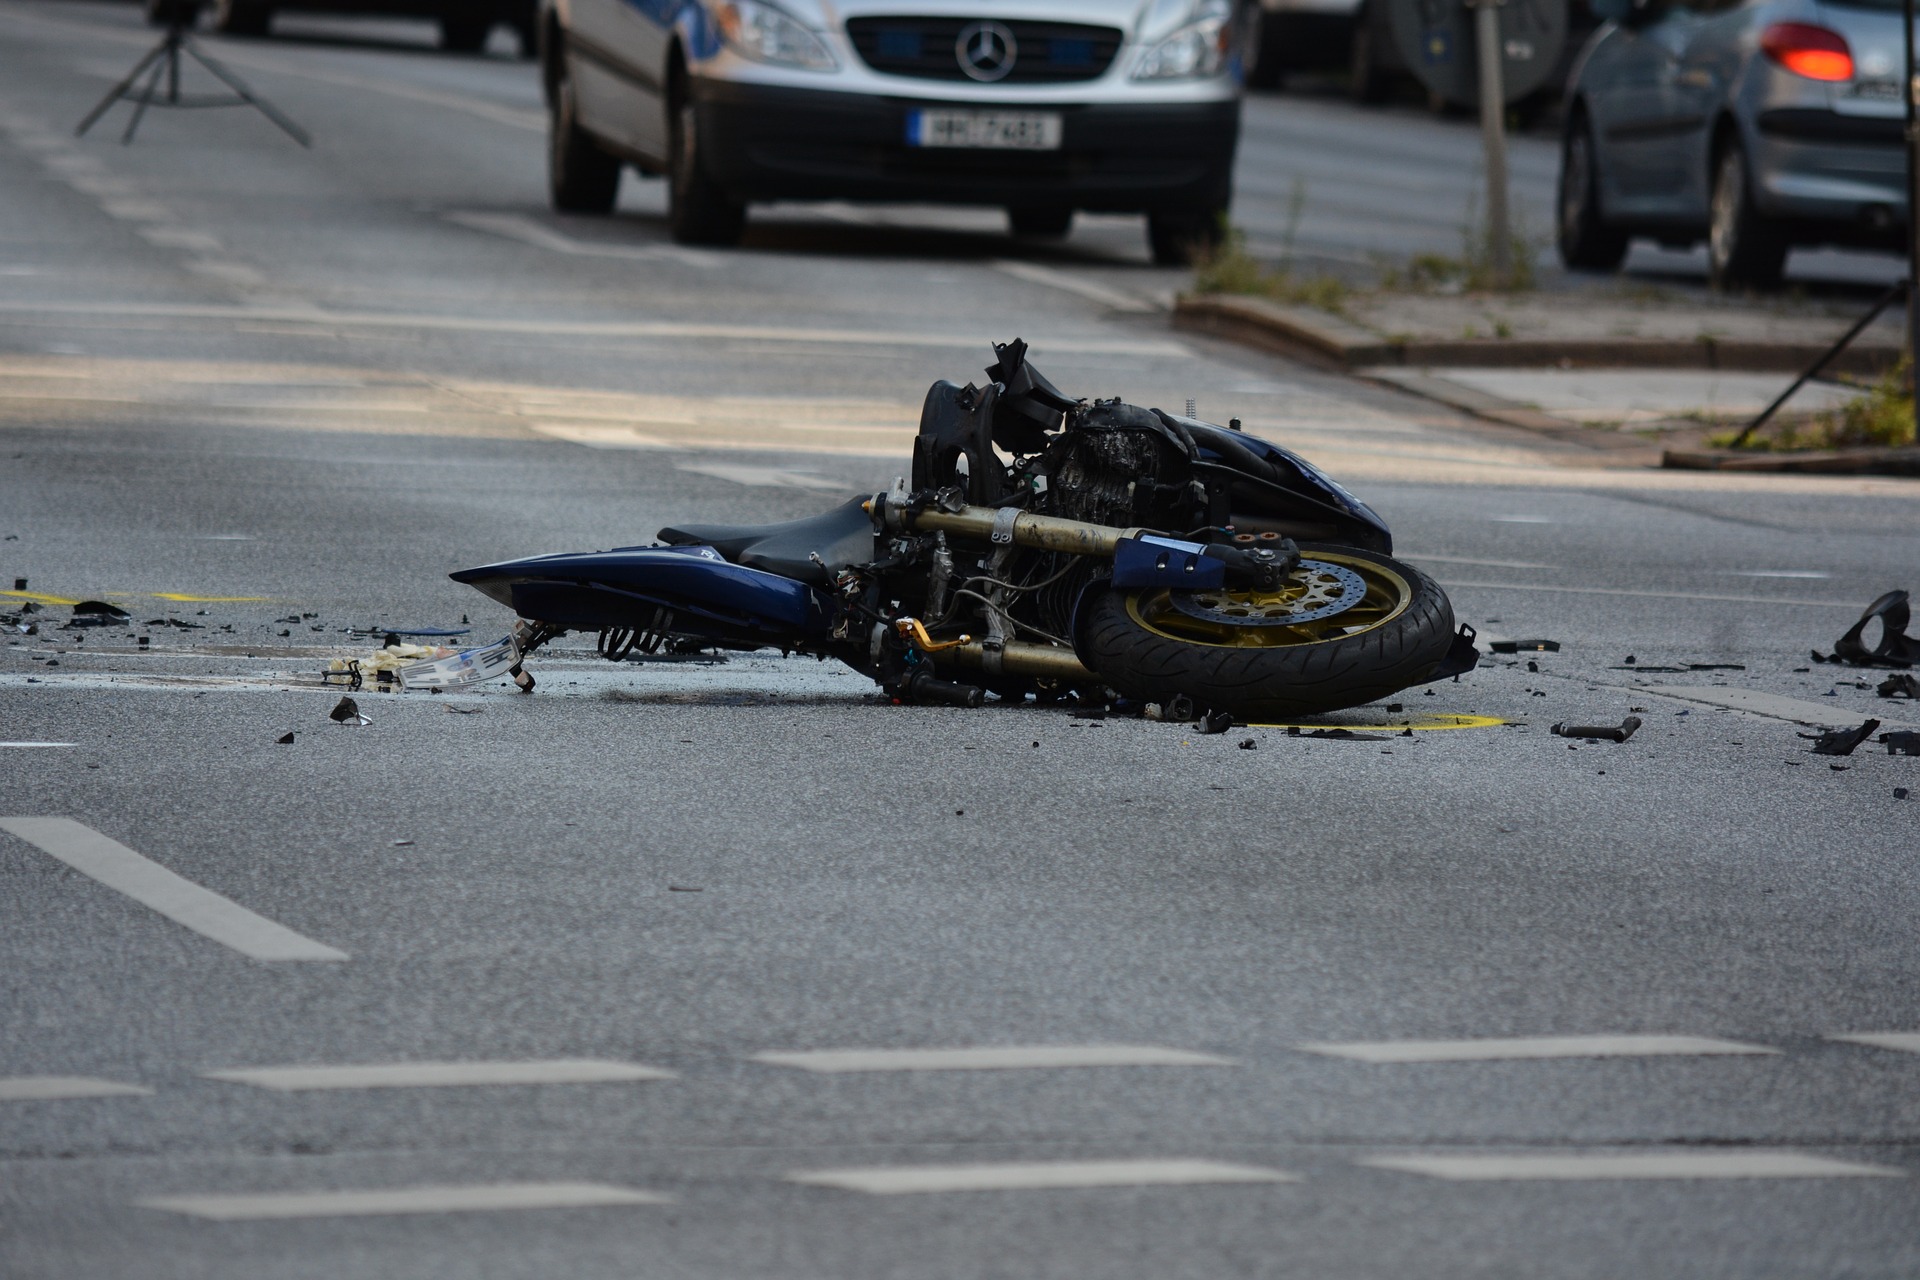 damaged motorcycle on road